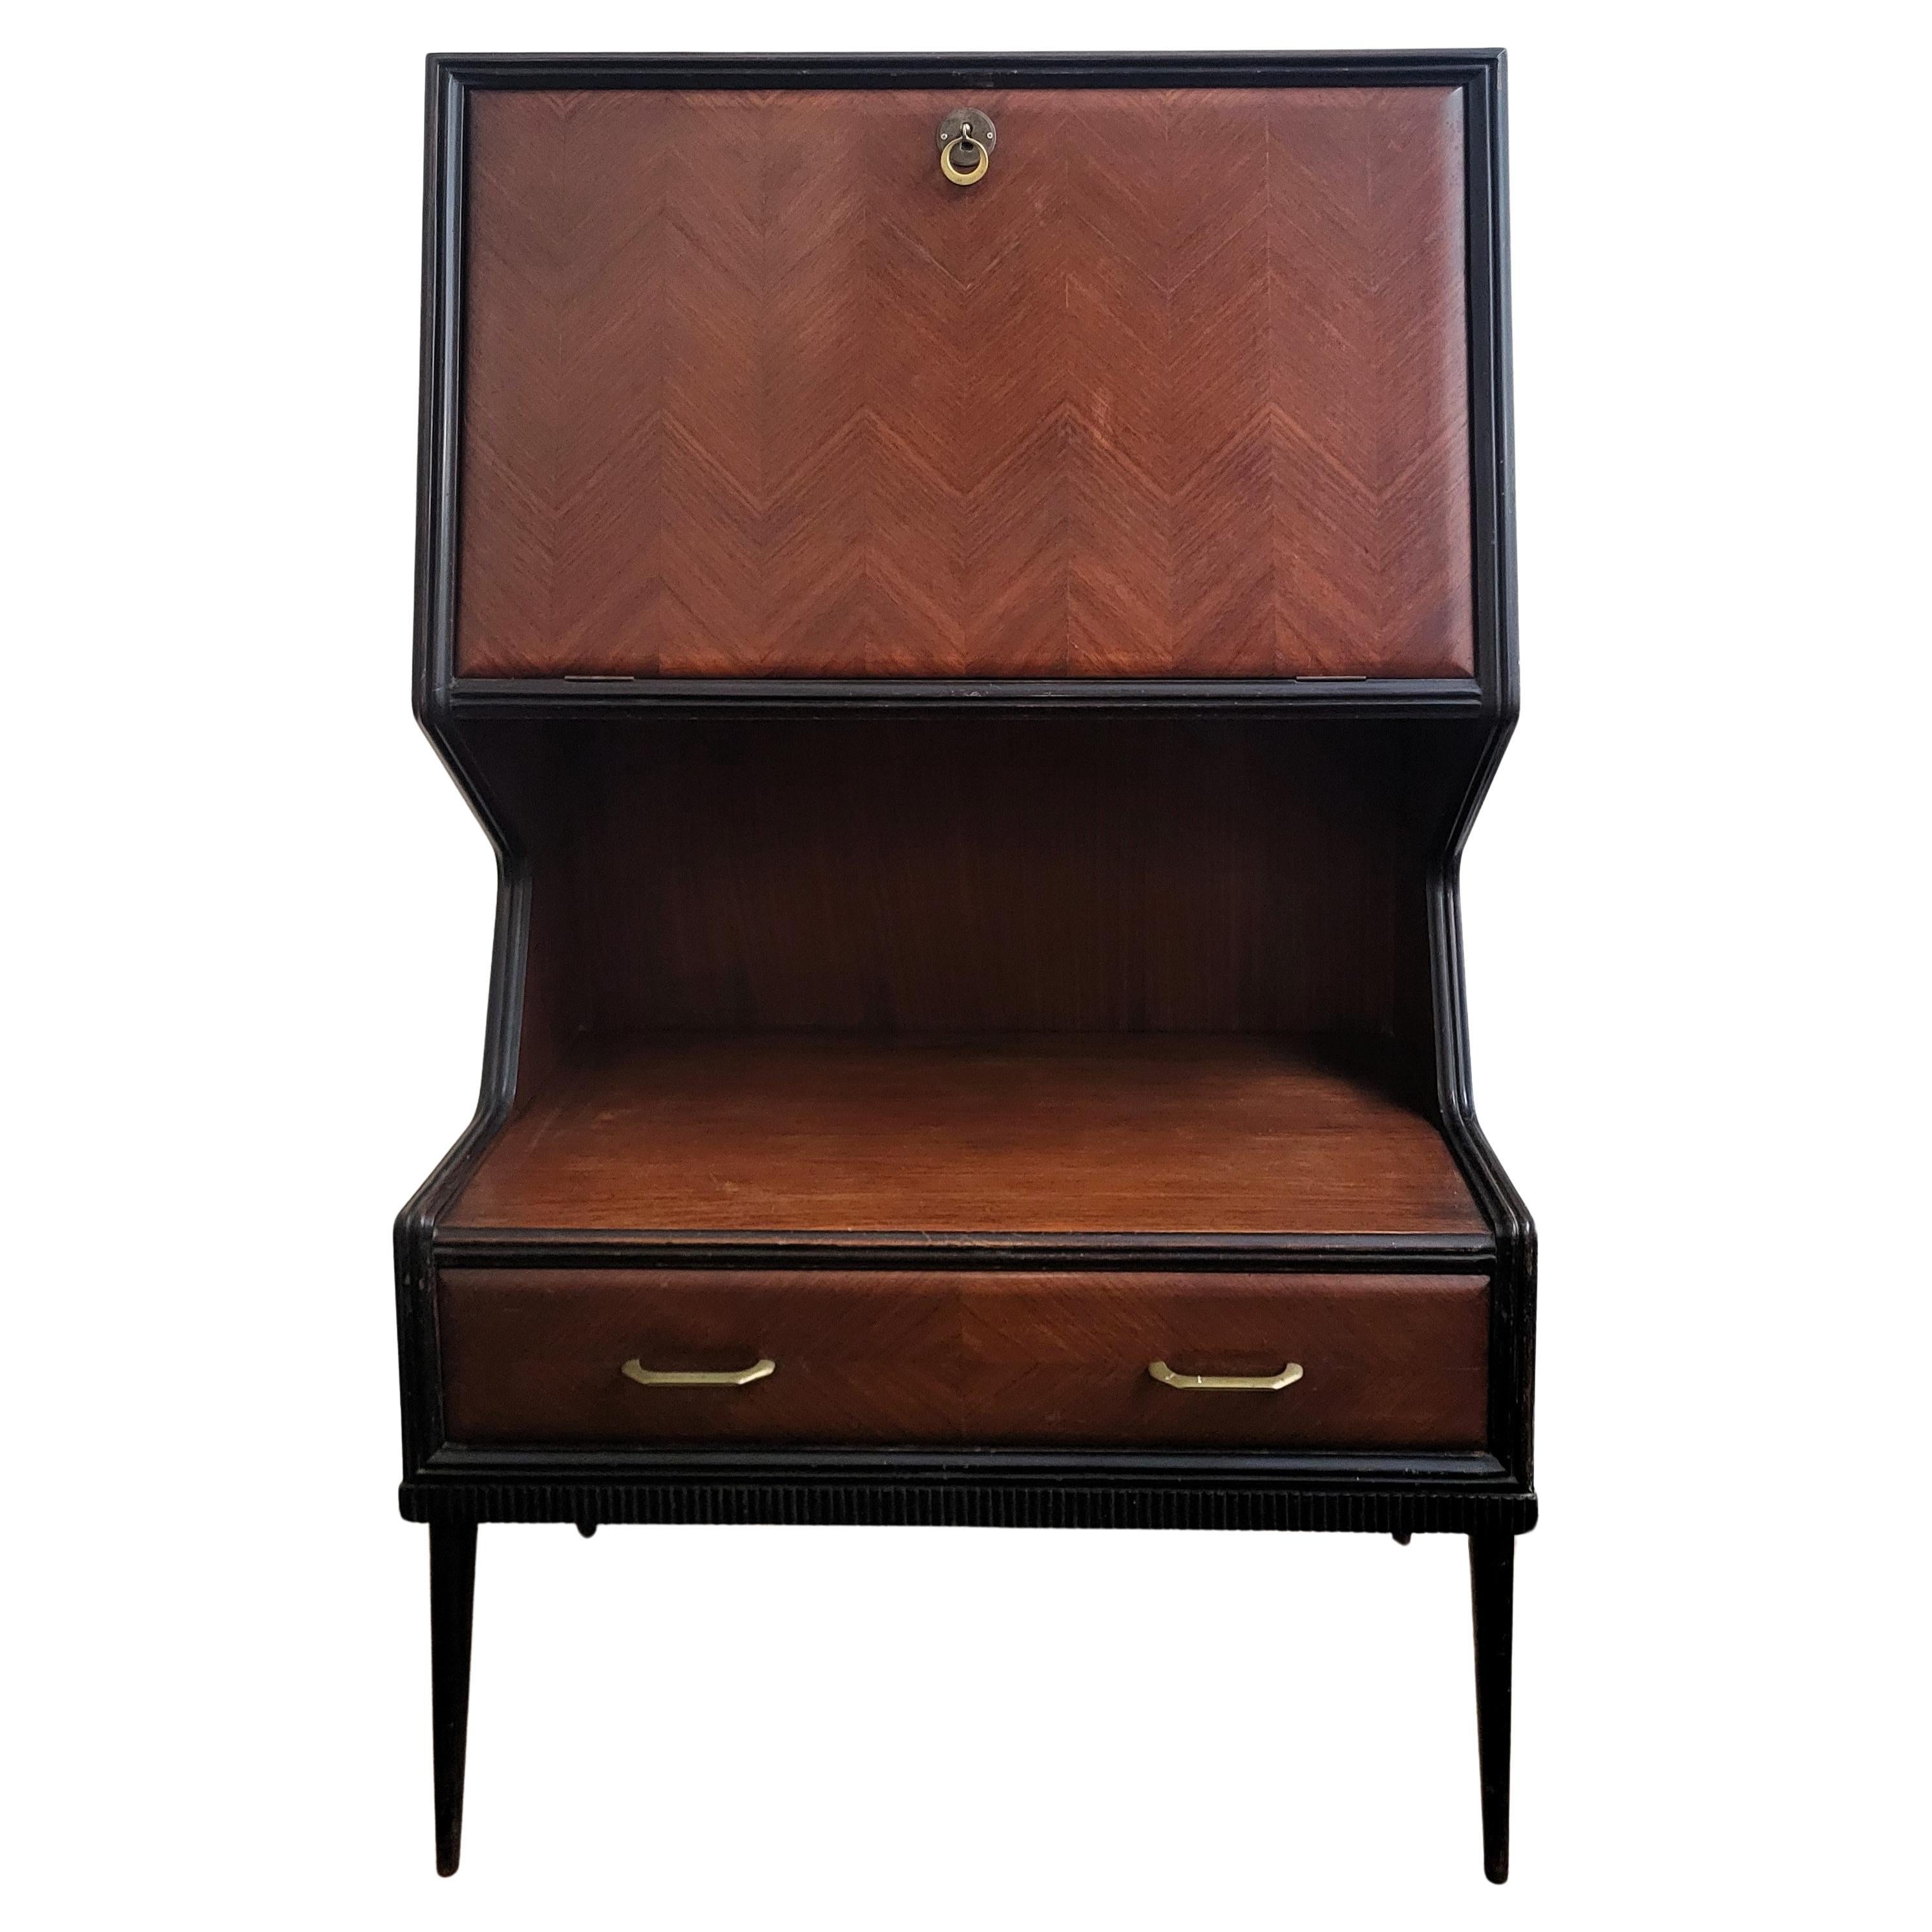 1950s Art Deco Mid-Century Italian Walnut Wood and Brass Tall Dry Bar Cabinet